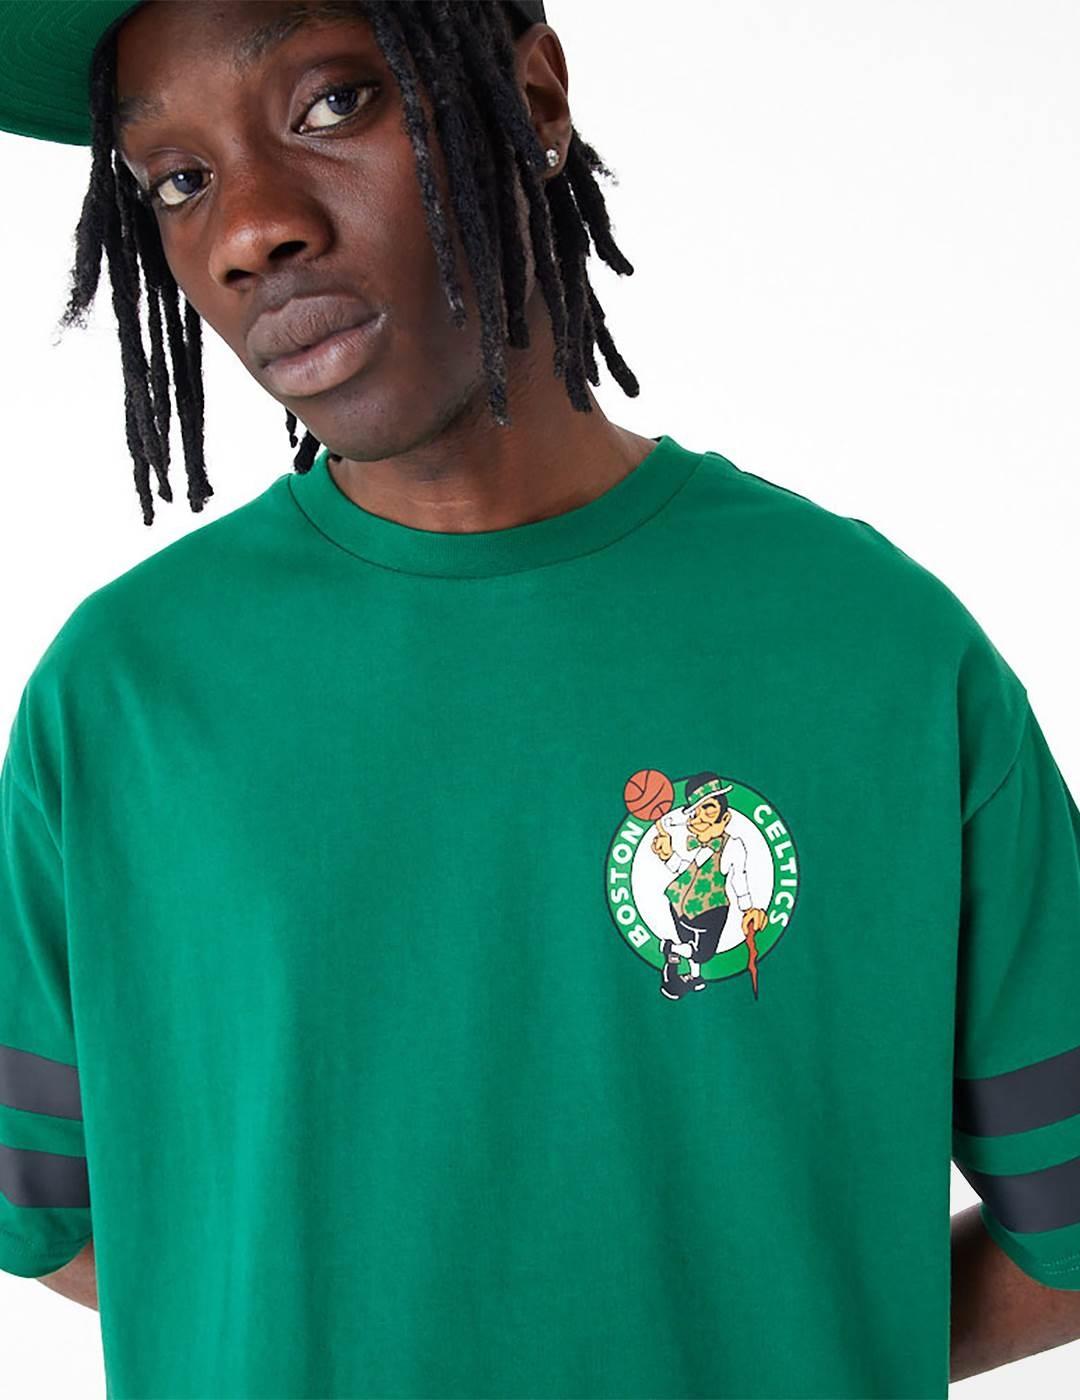 Camiseta New Era Nba Celtics Arch Graphic